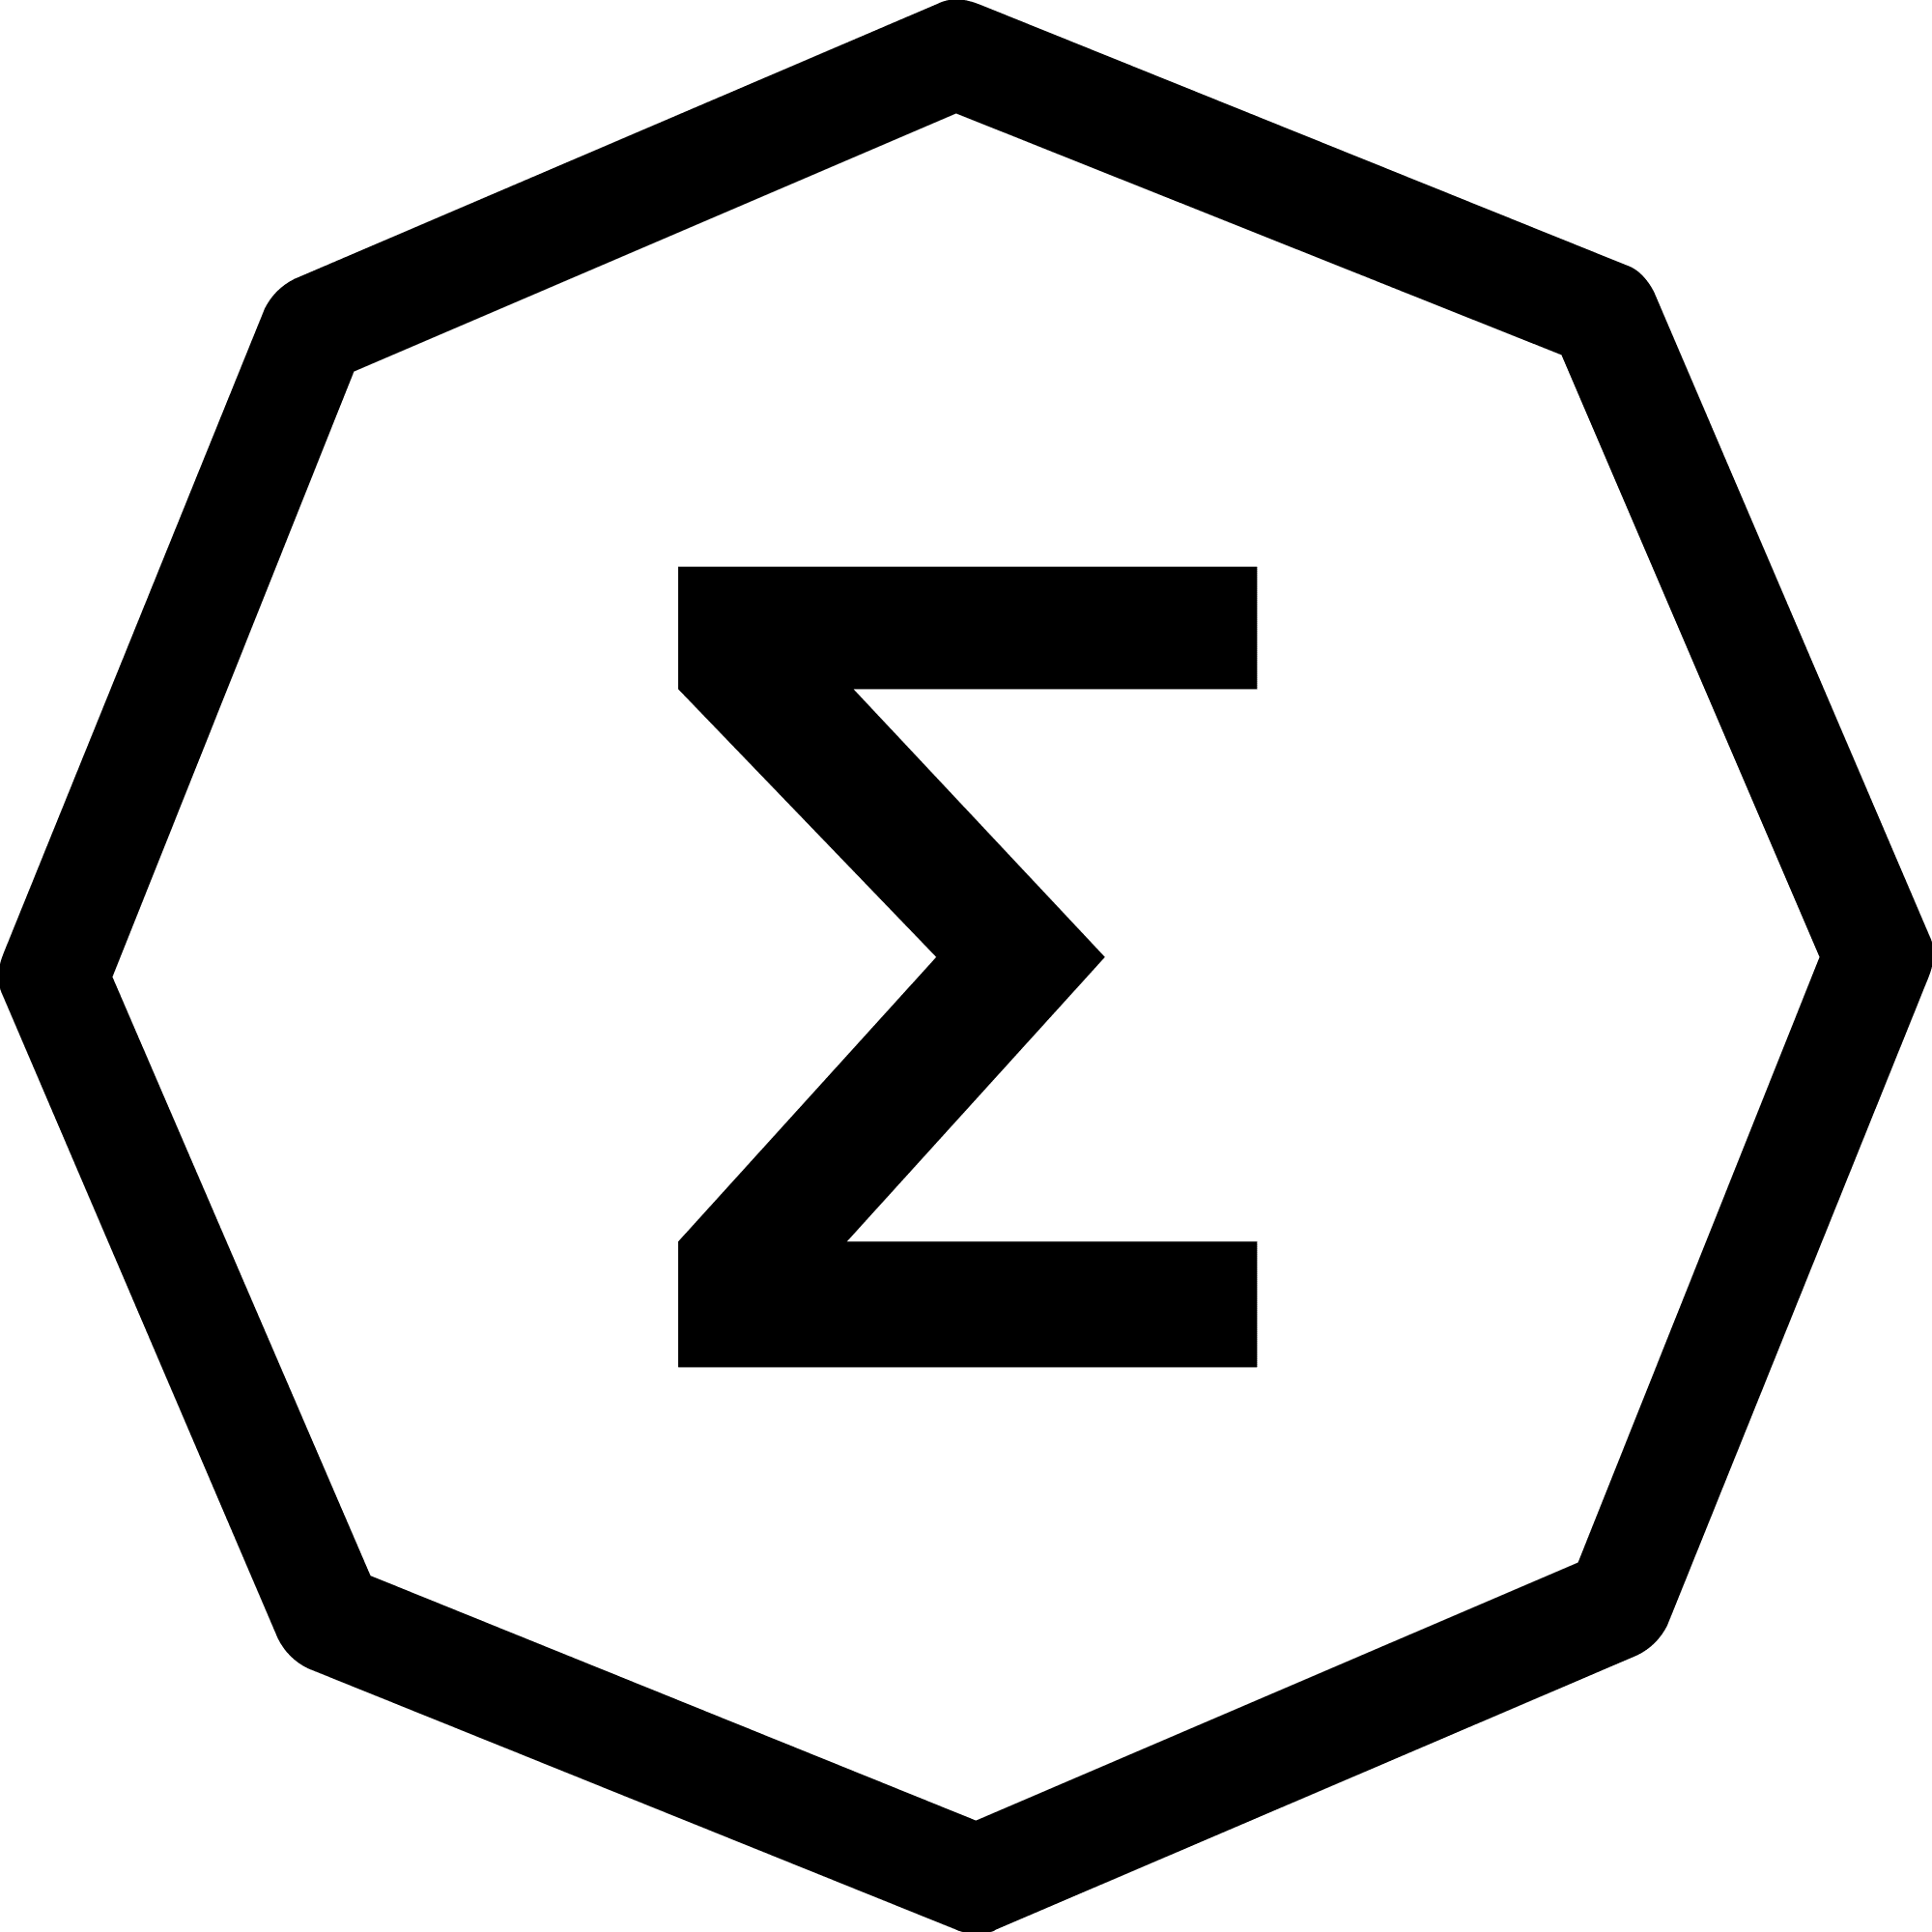 Ergo logo in png format